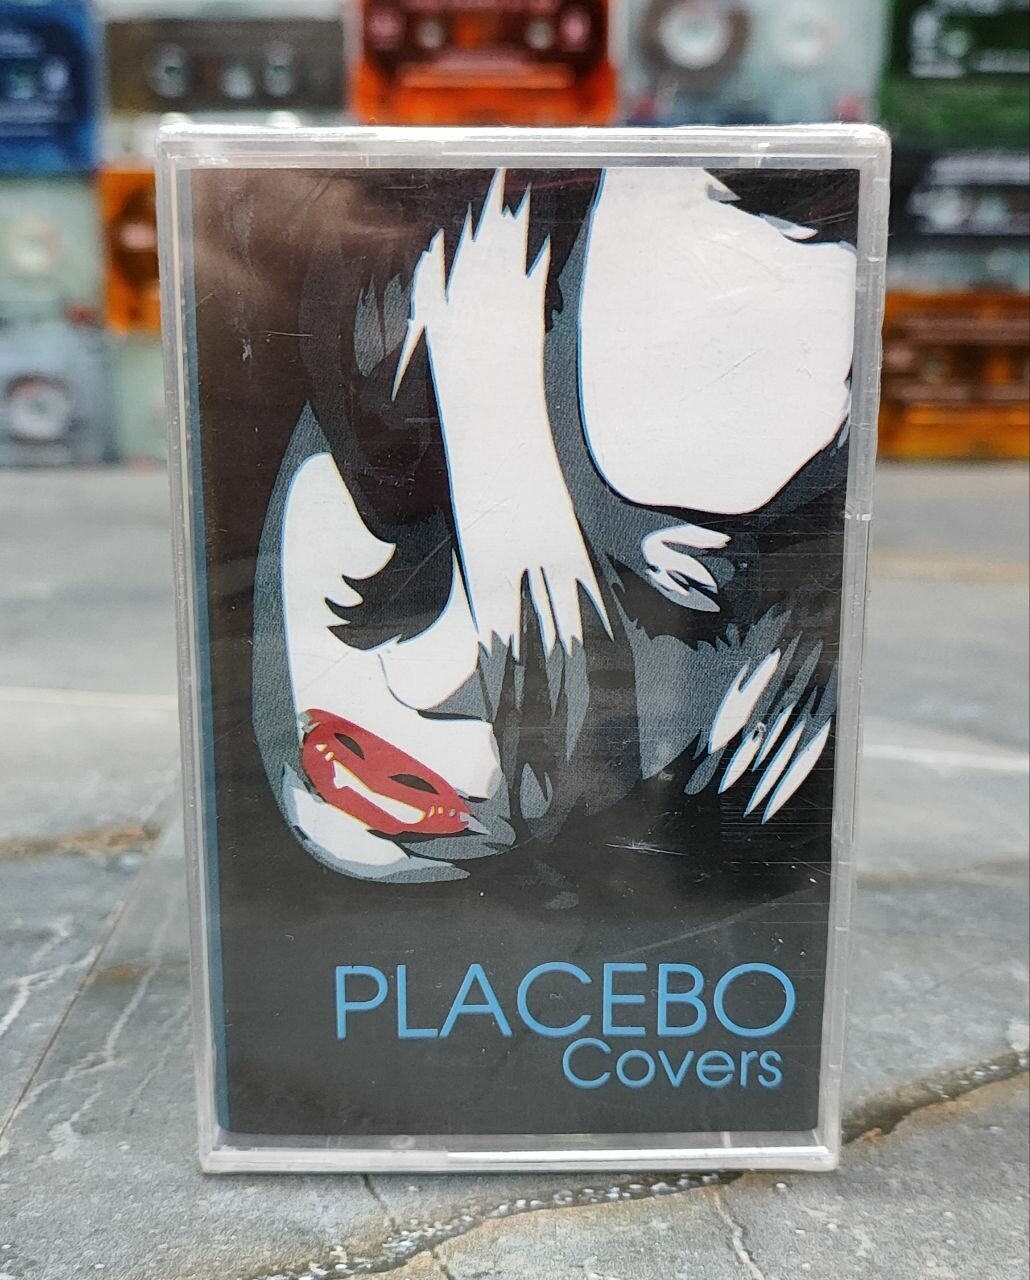 Placebo Covers, аудиокассета, кассета (МС), 2003, оригинал